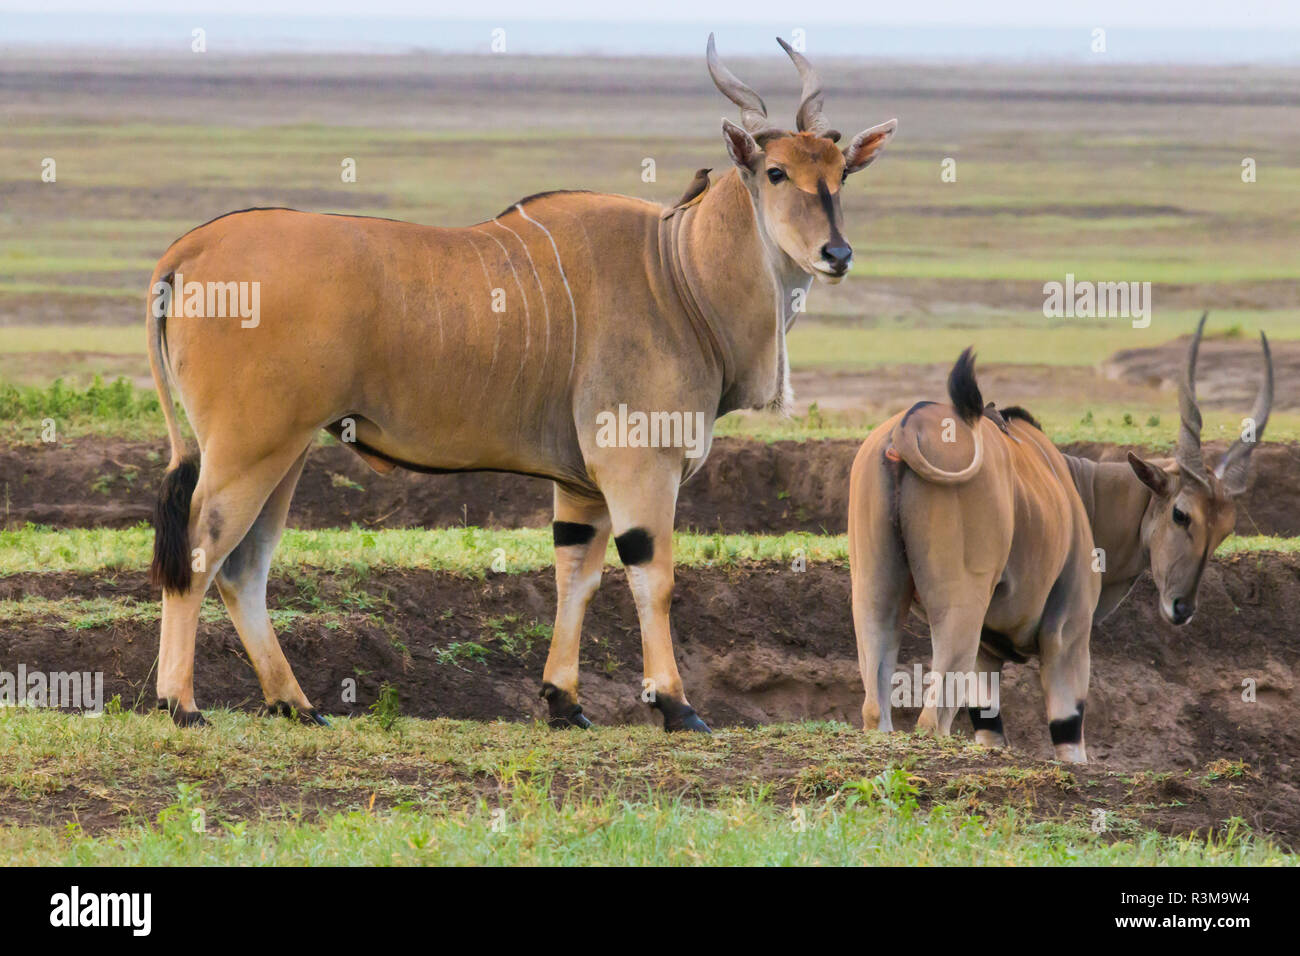 L'Africa. Tanzania. Eland (Taurotragus oryx), una grande antilope, a Ndutu, Serengeti National Park. Foto Stock